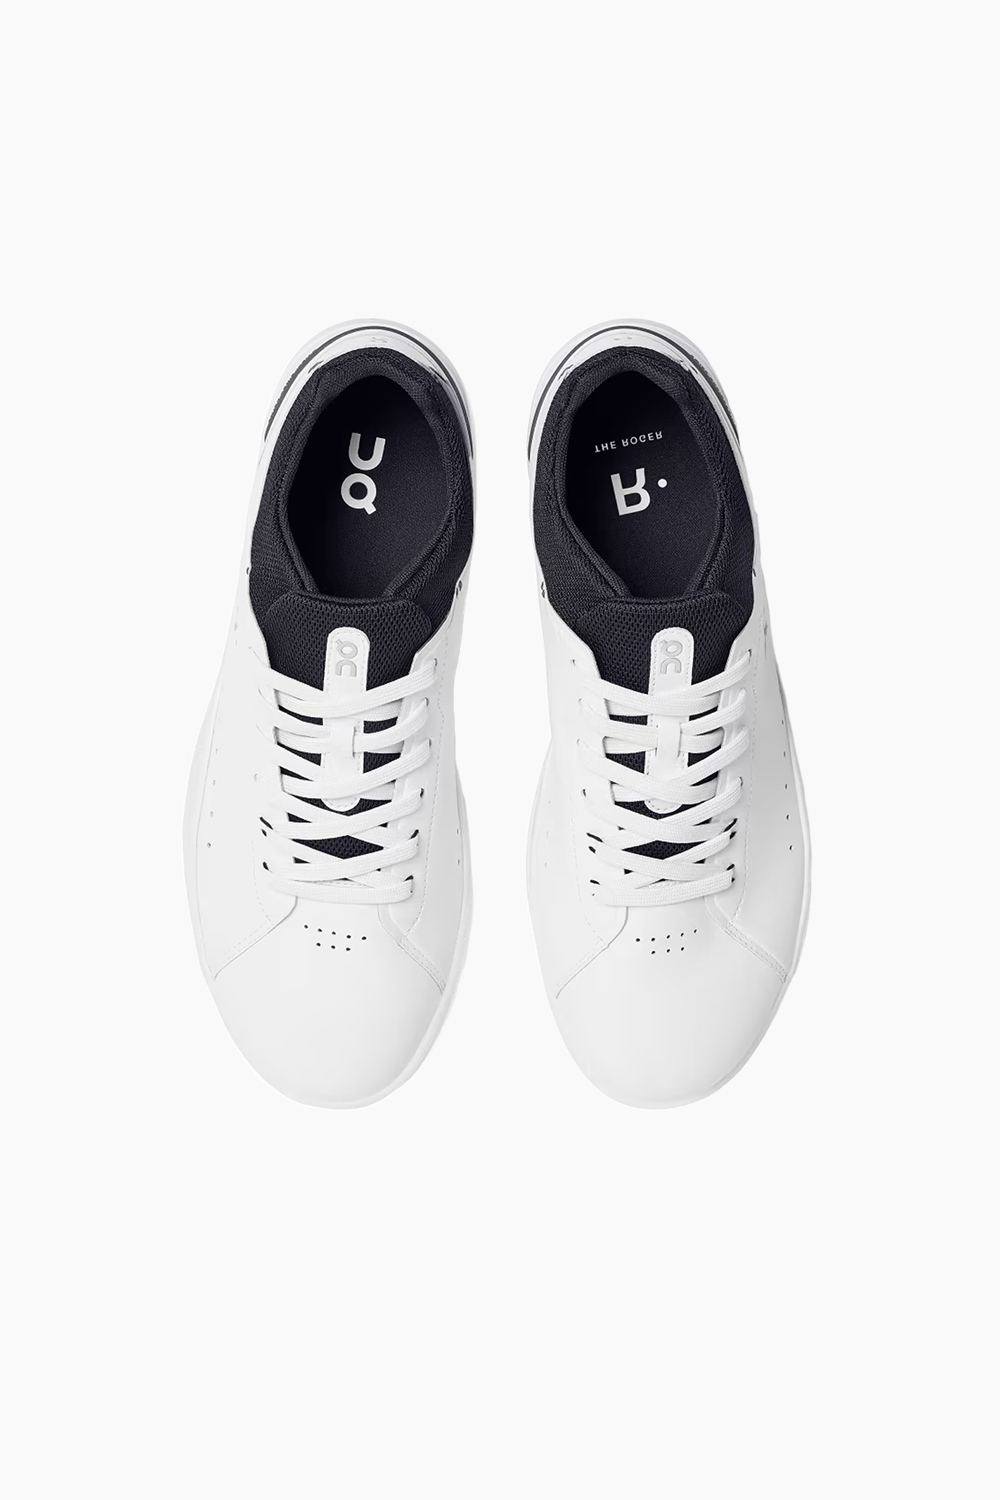 ON | Men's The Roger Advantage Sneaker in White/Midnight